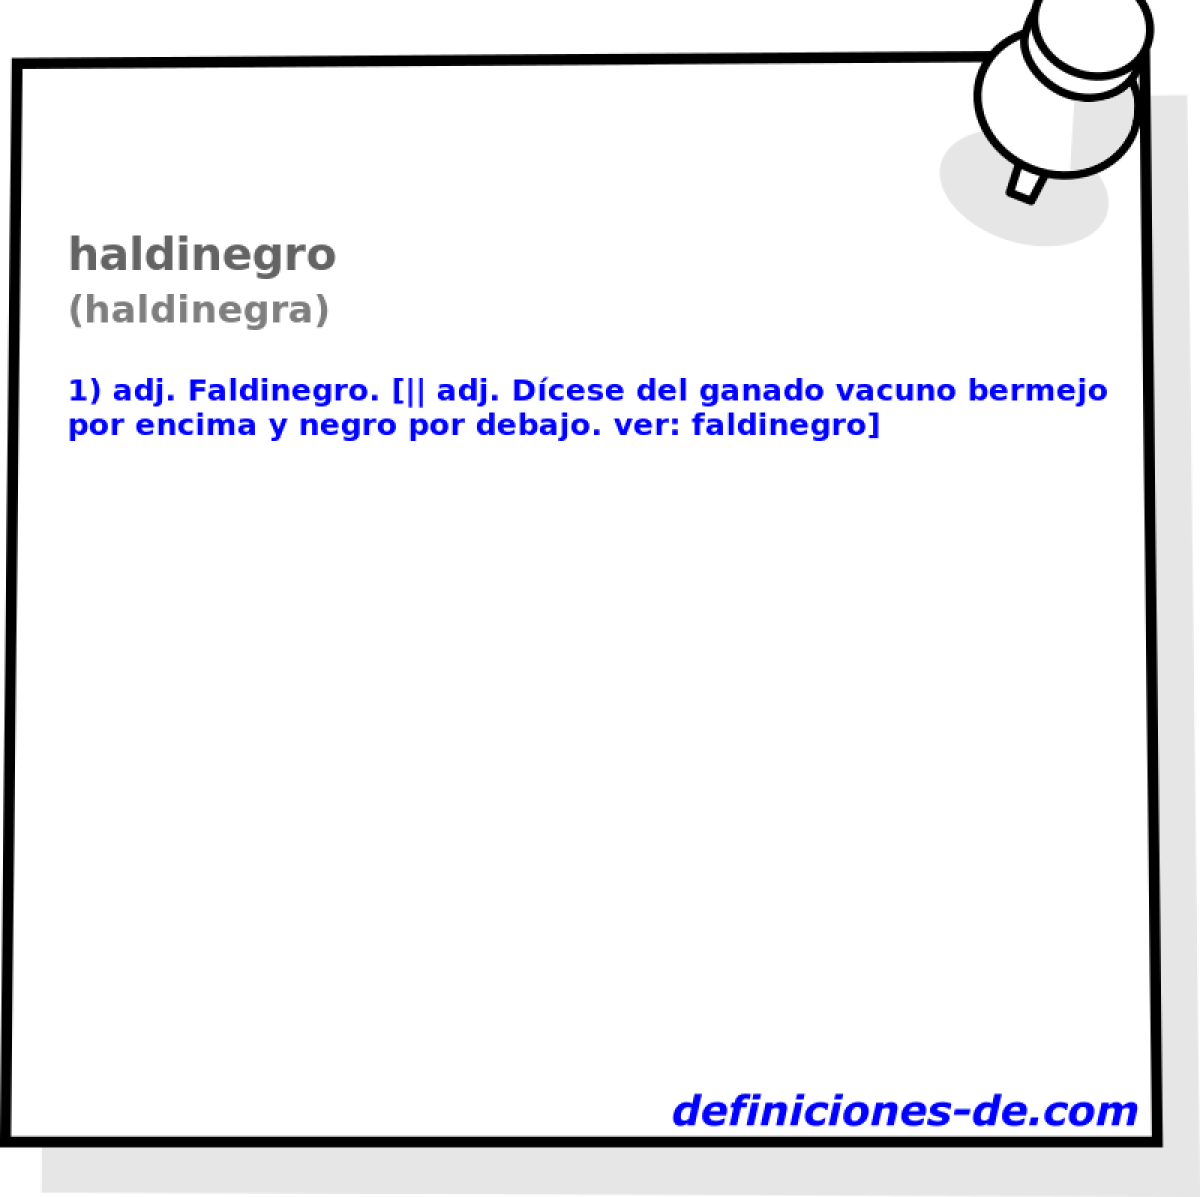 haldinegro (haldinegra)